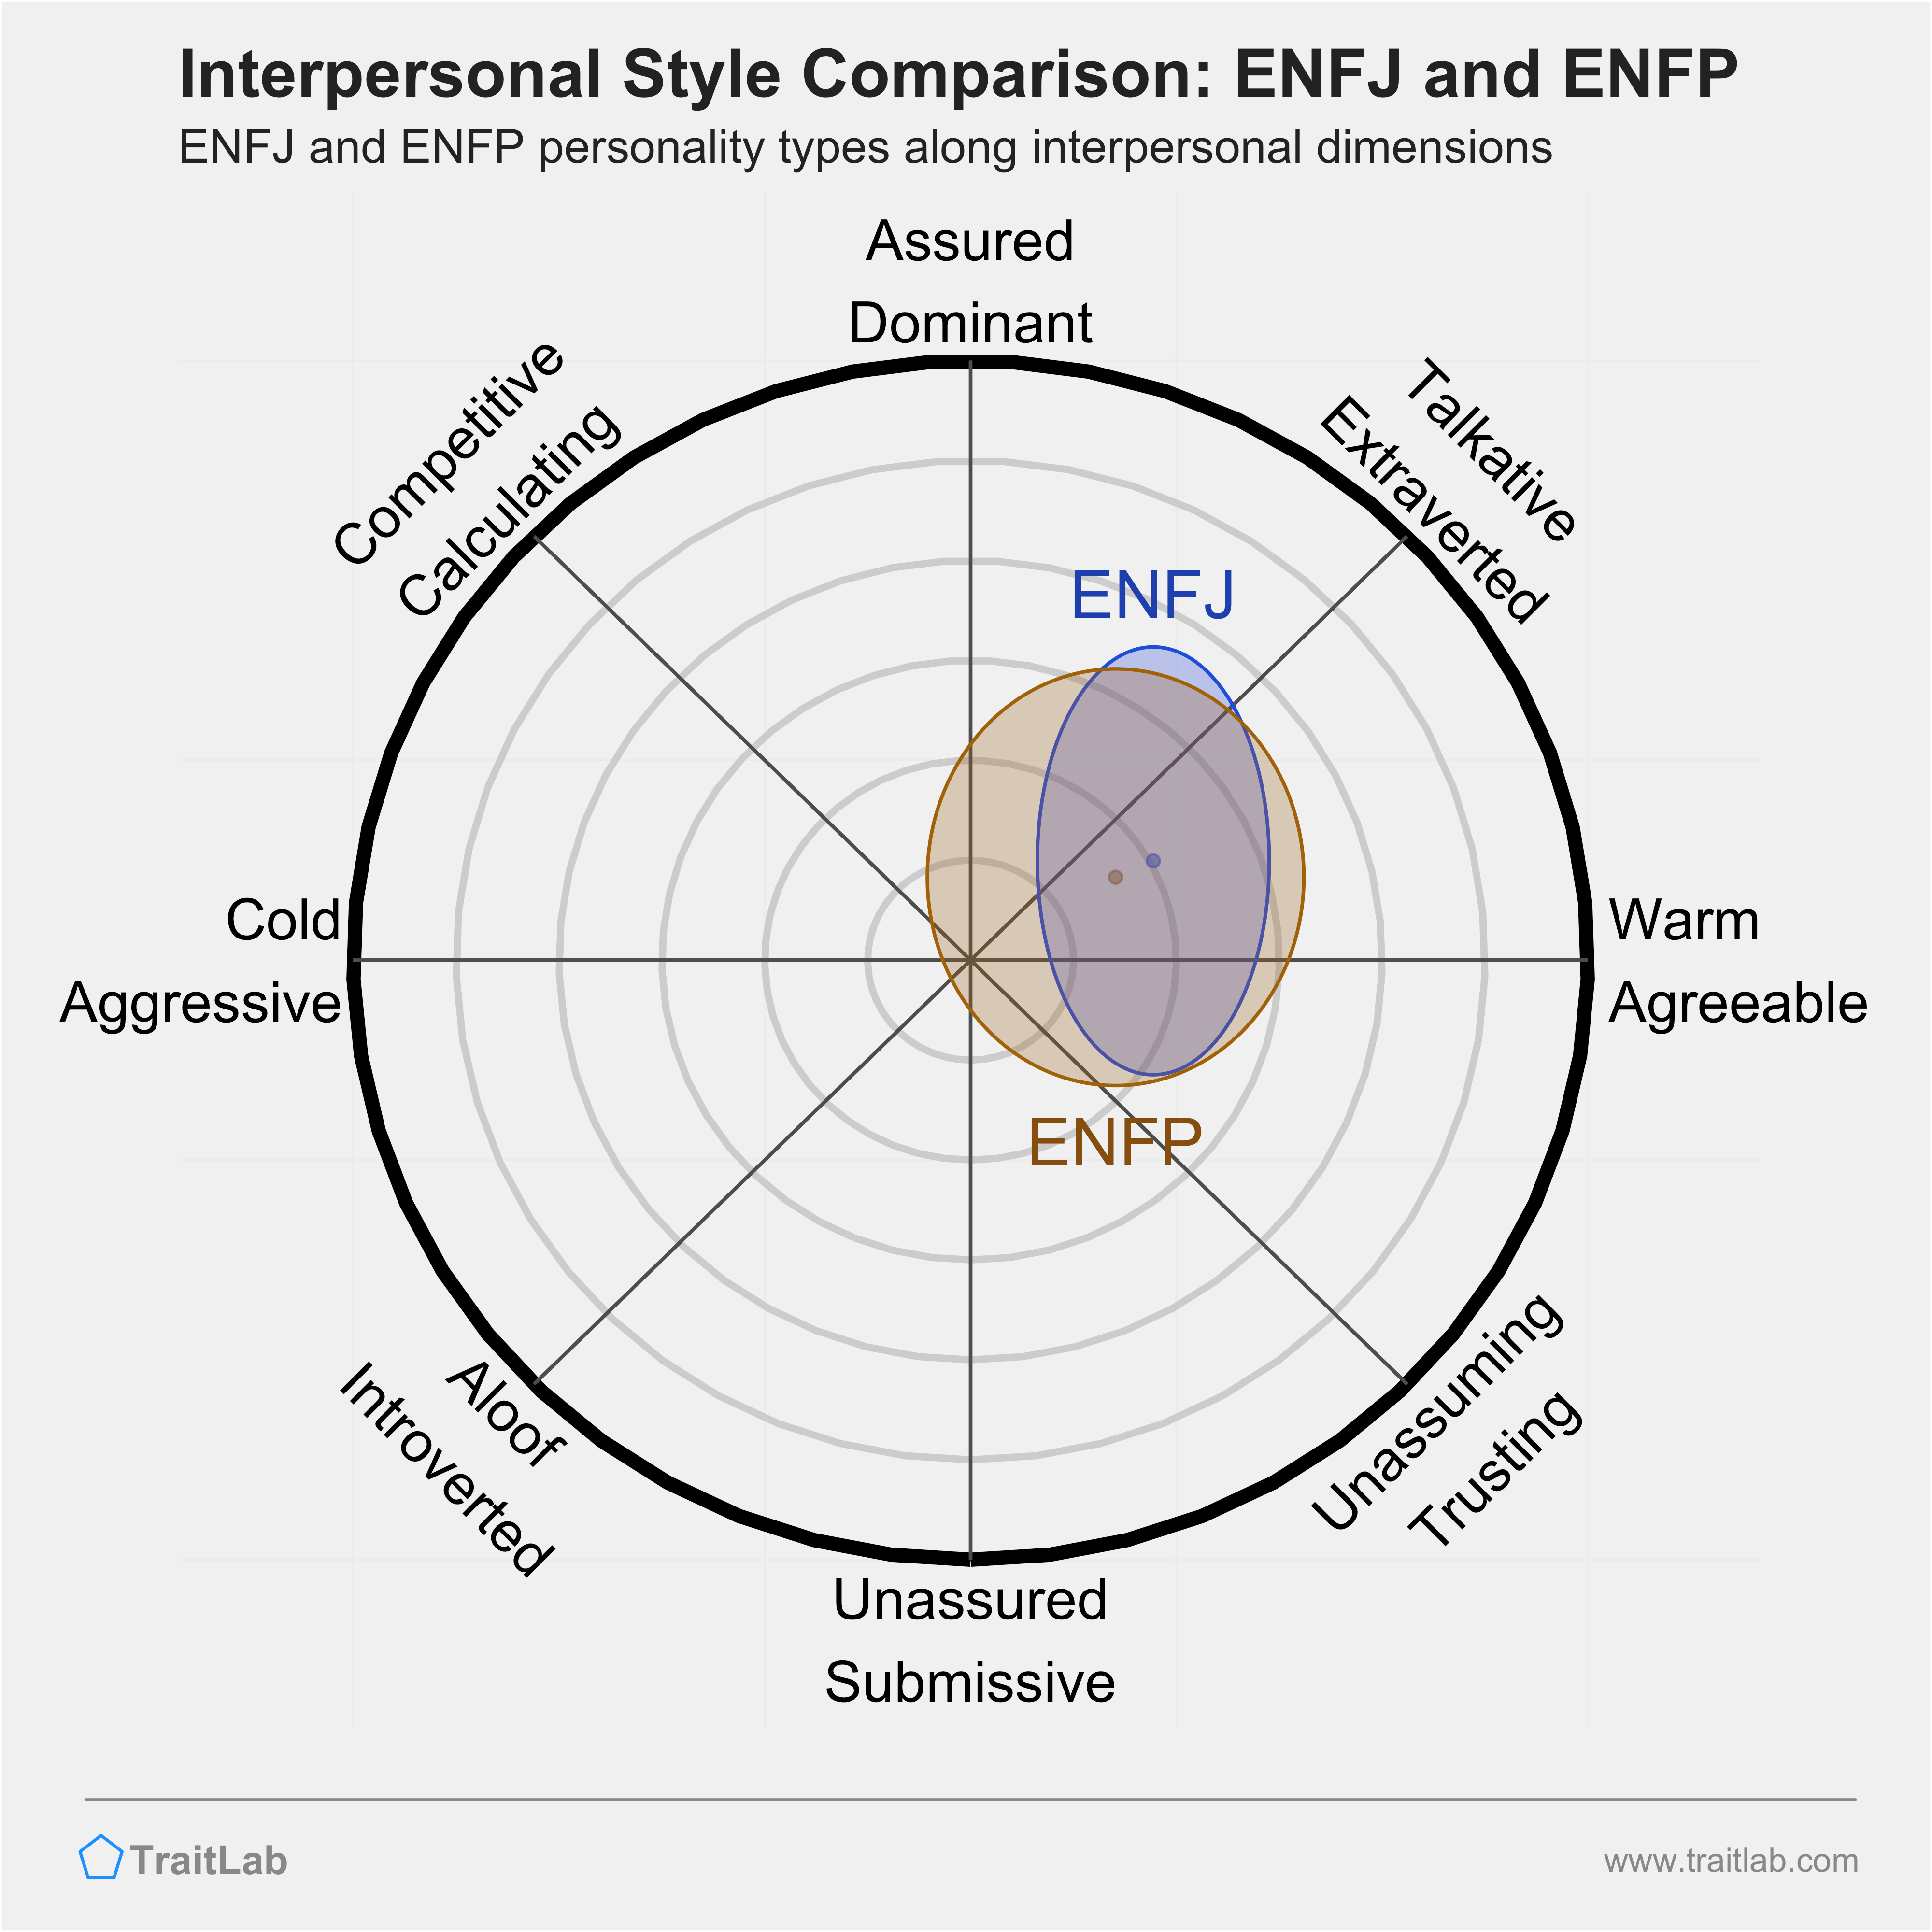 ENFJ and ENFP comparison across interpersonal dimensions